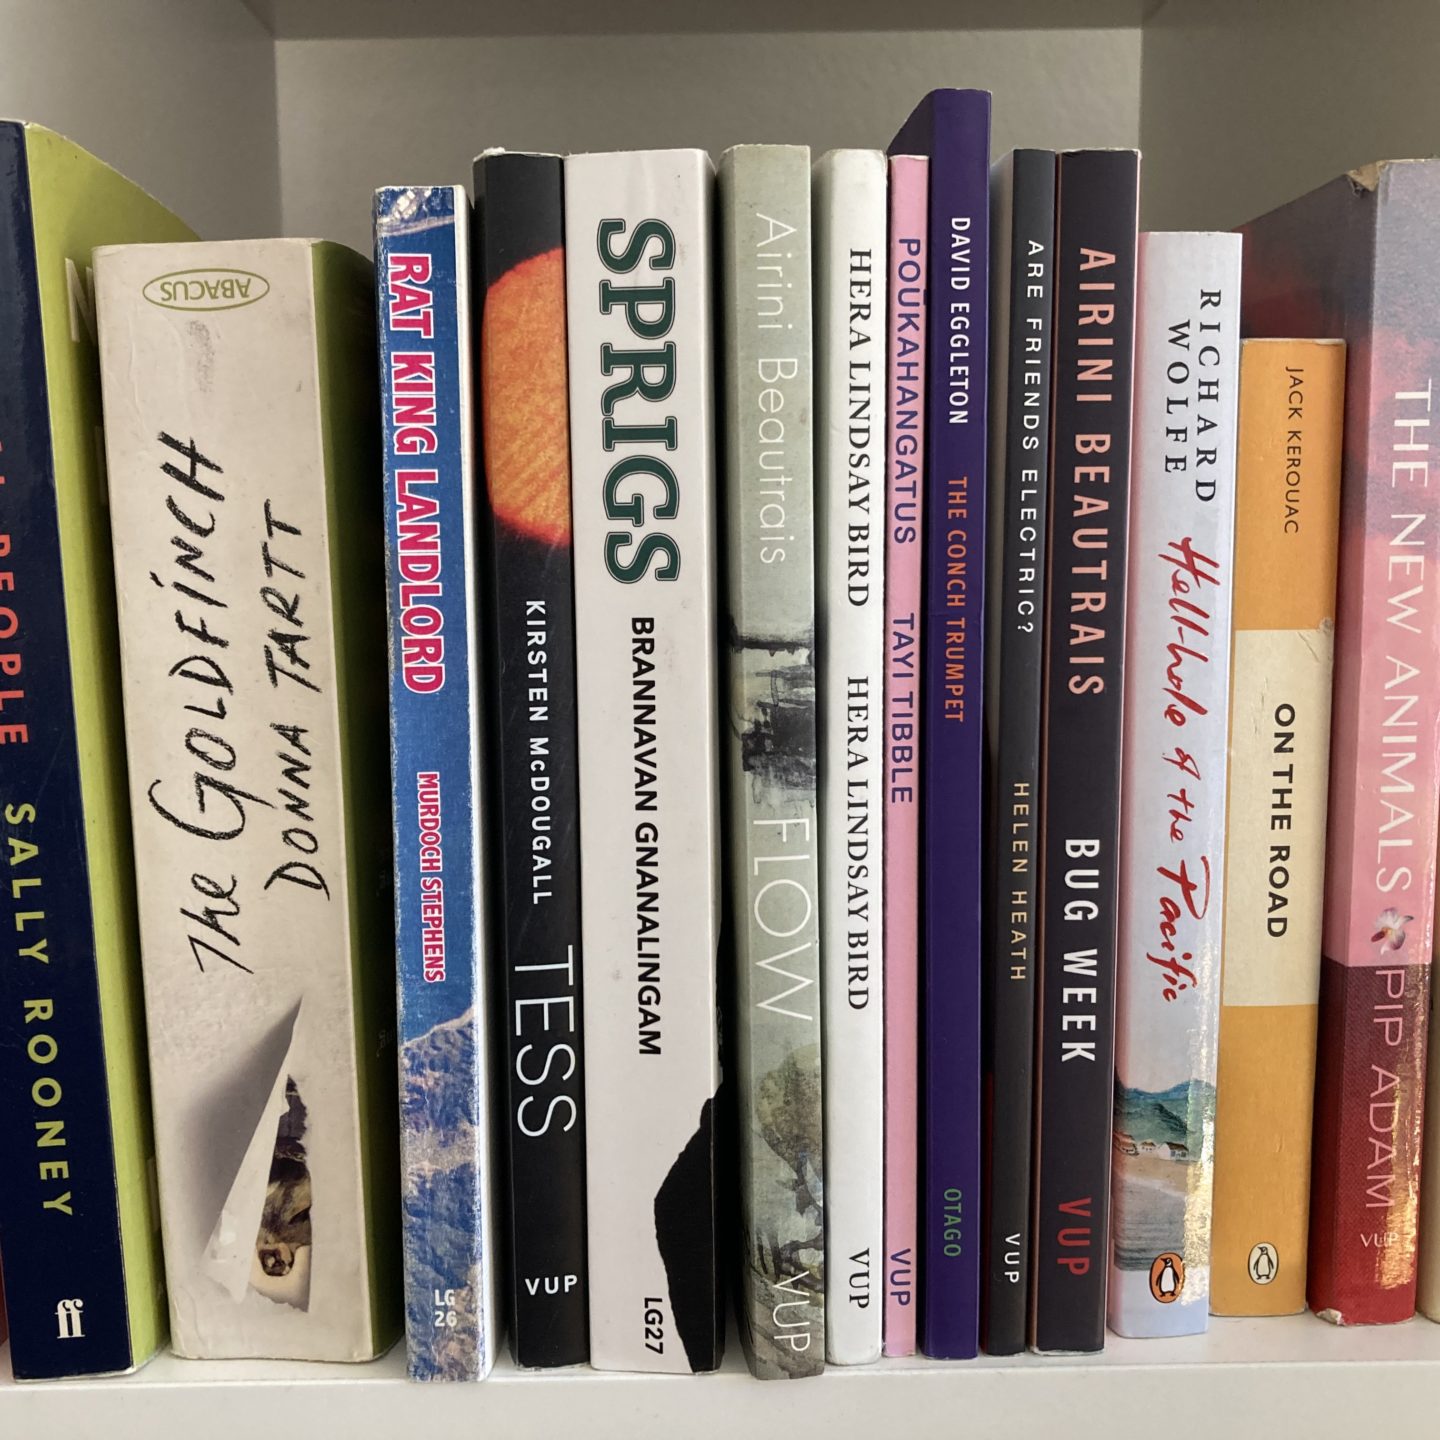 Novels on a bookshelf